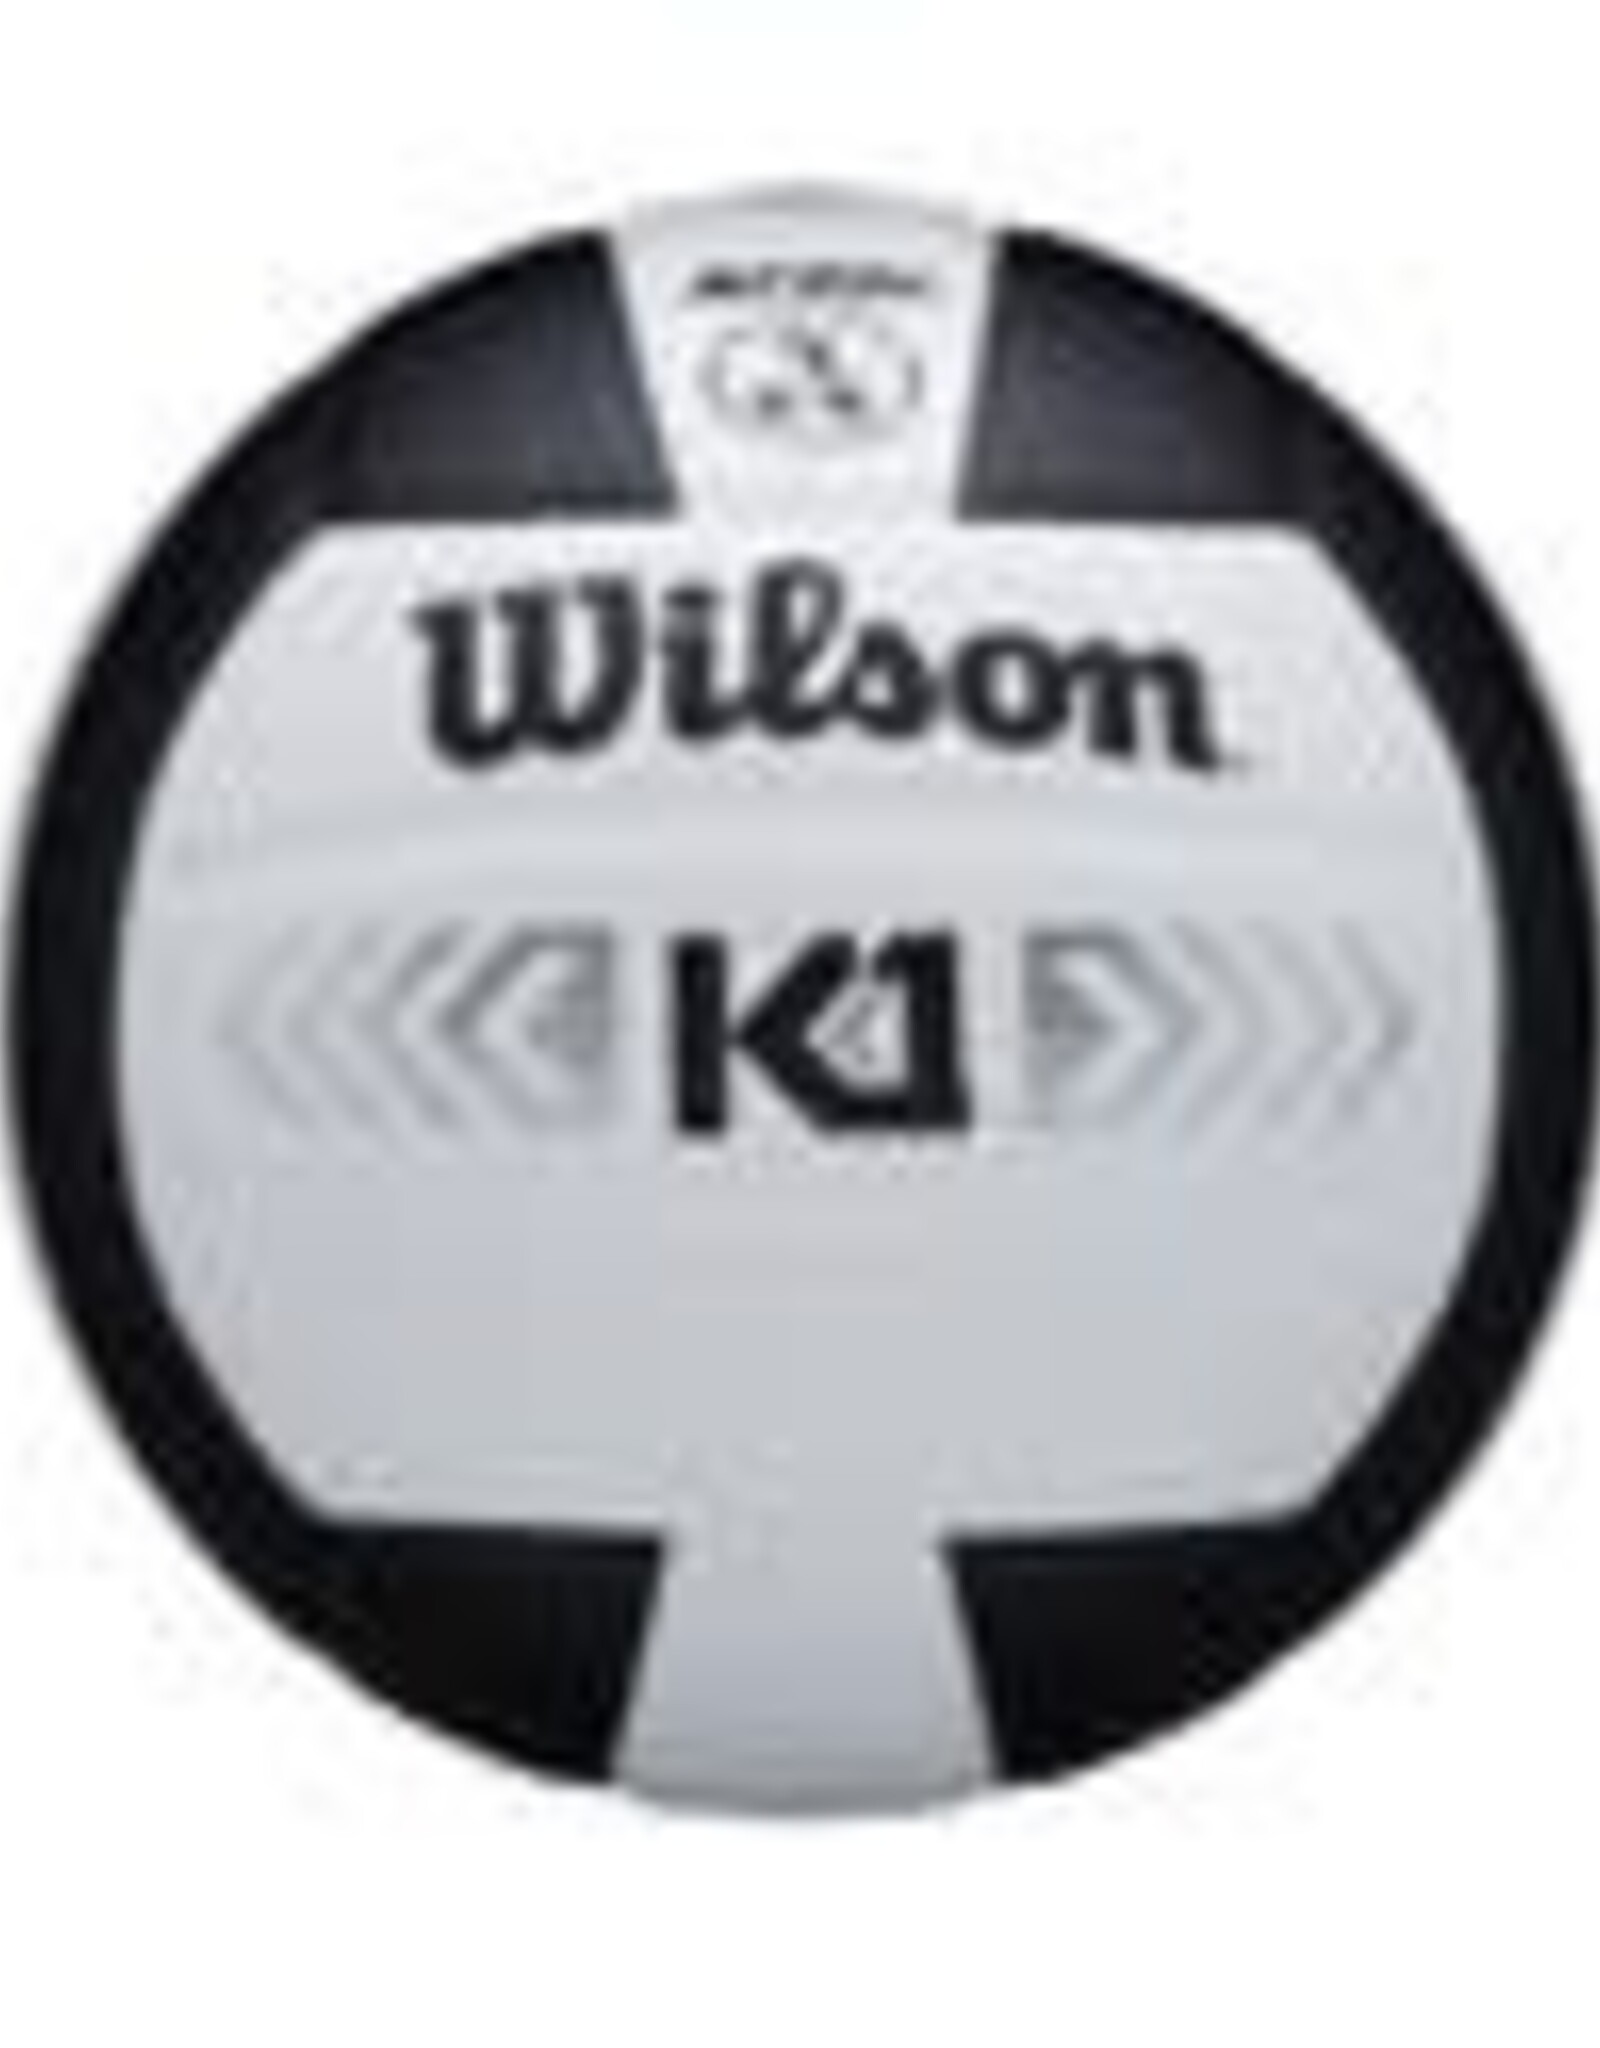 Wilson K1 Silver VB